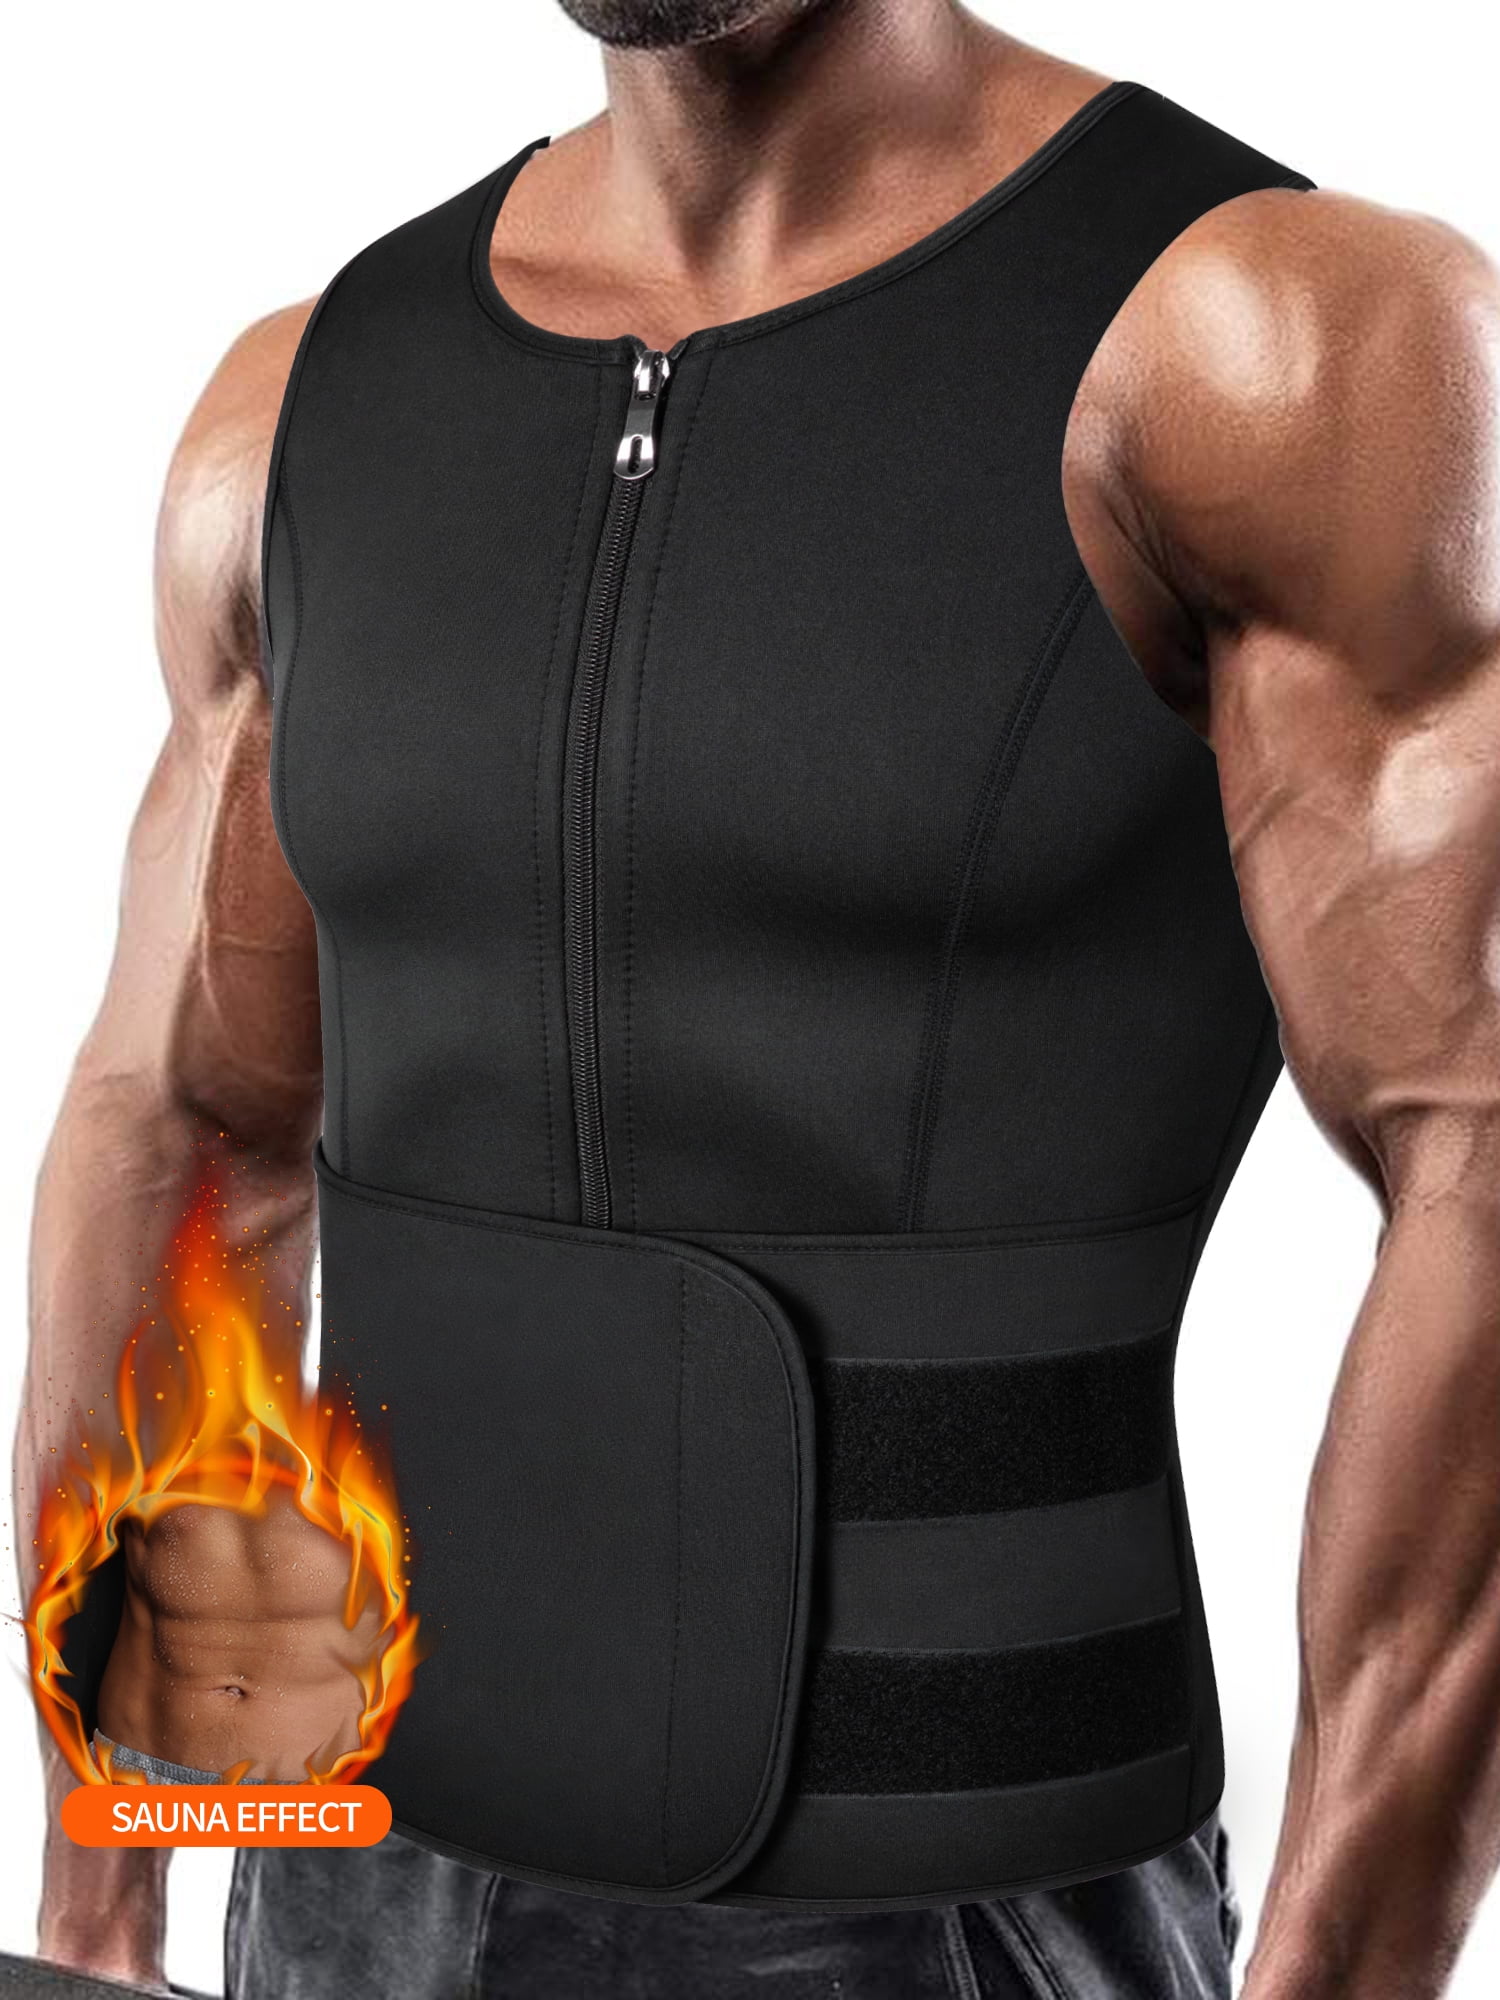 Men's Neoprene Sauna Suit Waist Trainer Vest Body Shaper Back Support Workout